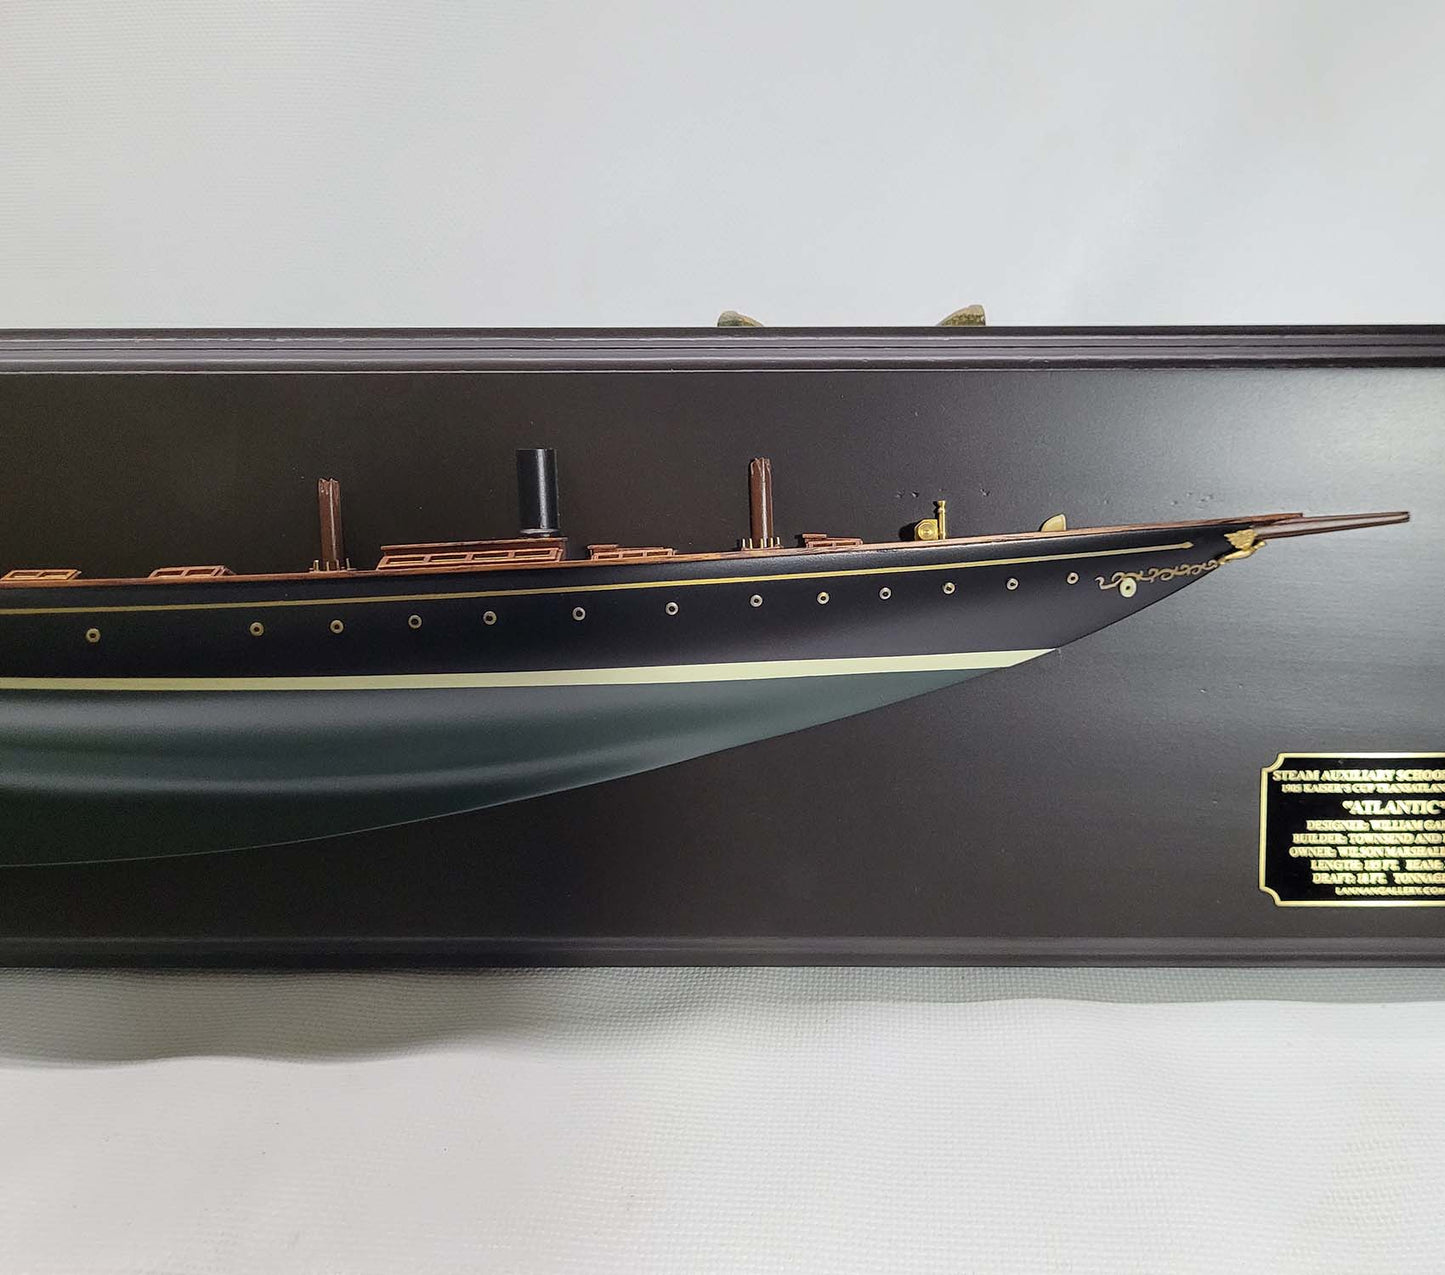 Fine Half Model of the Racing Yacht Atlantic - Lannan Gallery